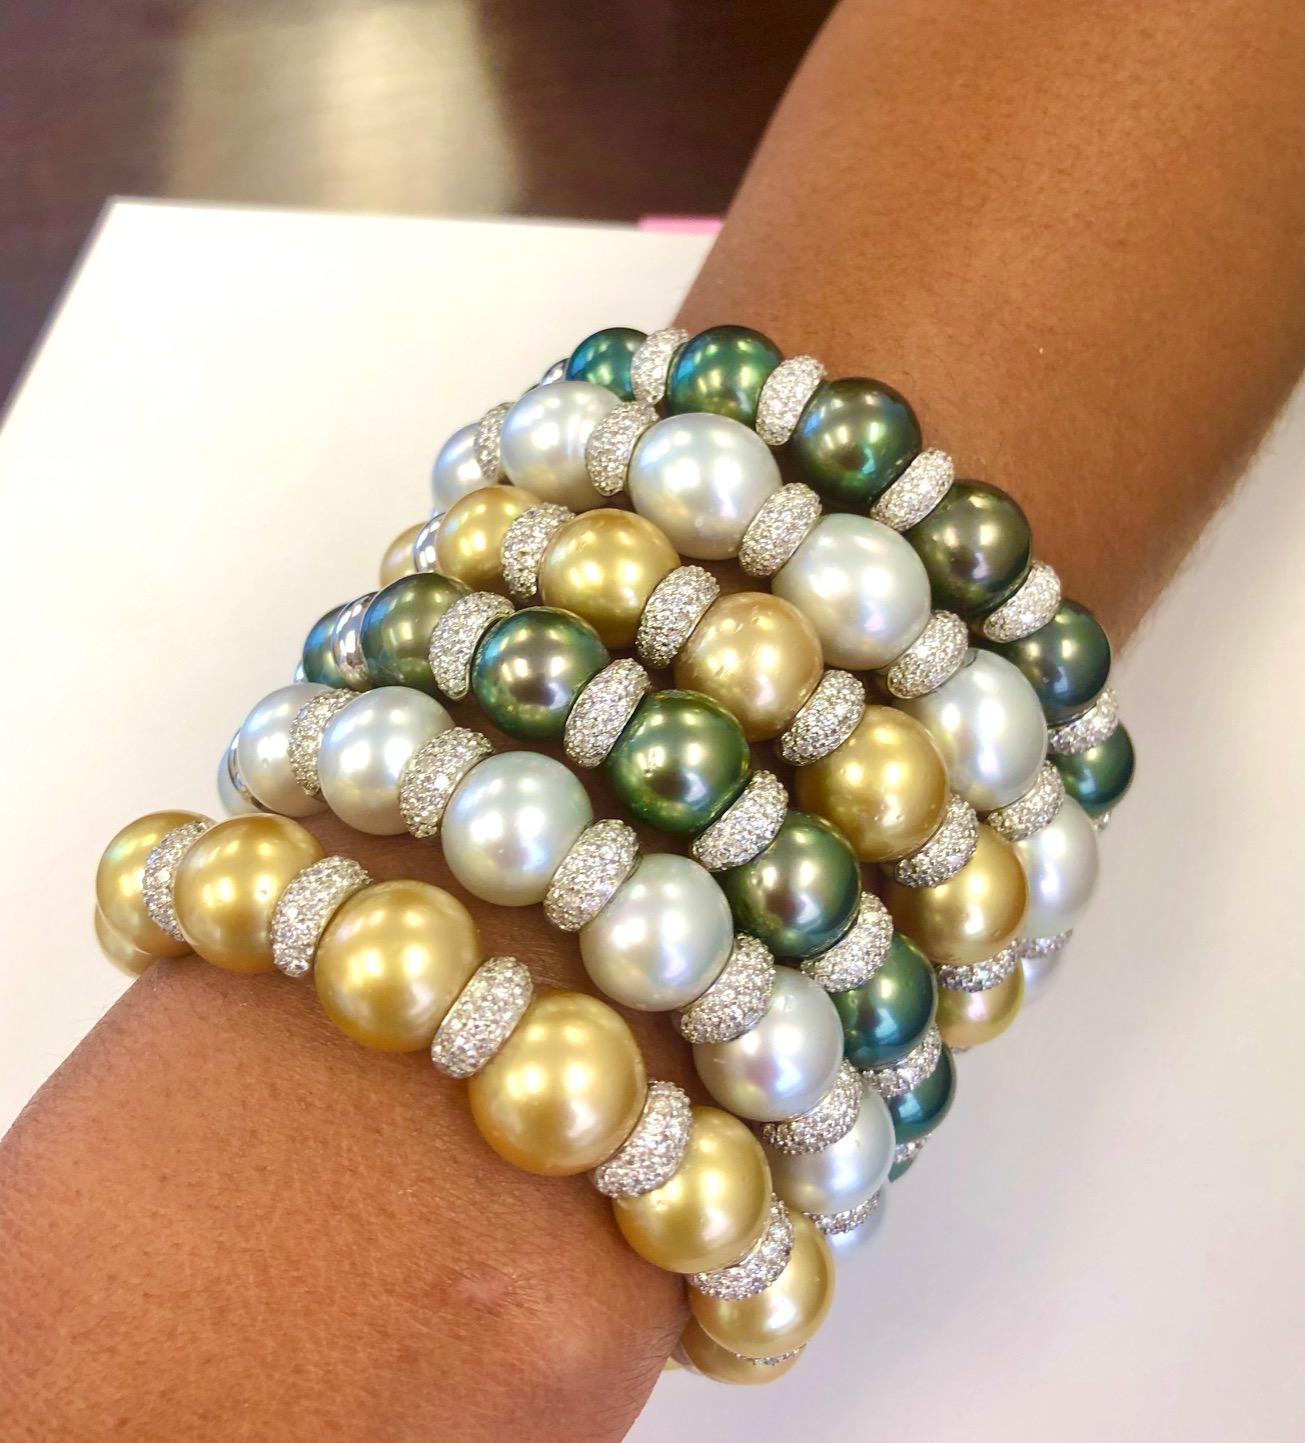 18 Karat White Gold South Sea Pearl and Diamond Bangle Bracelet For Sale 5